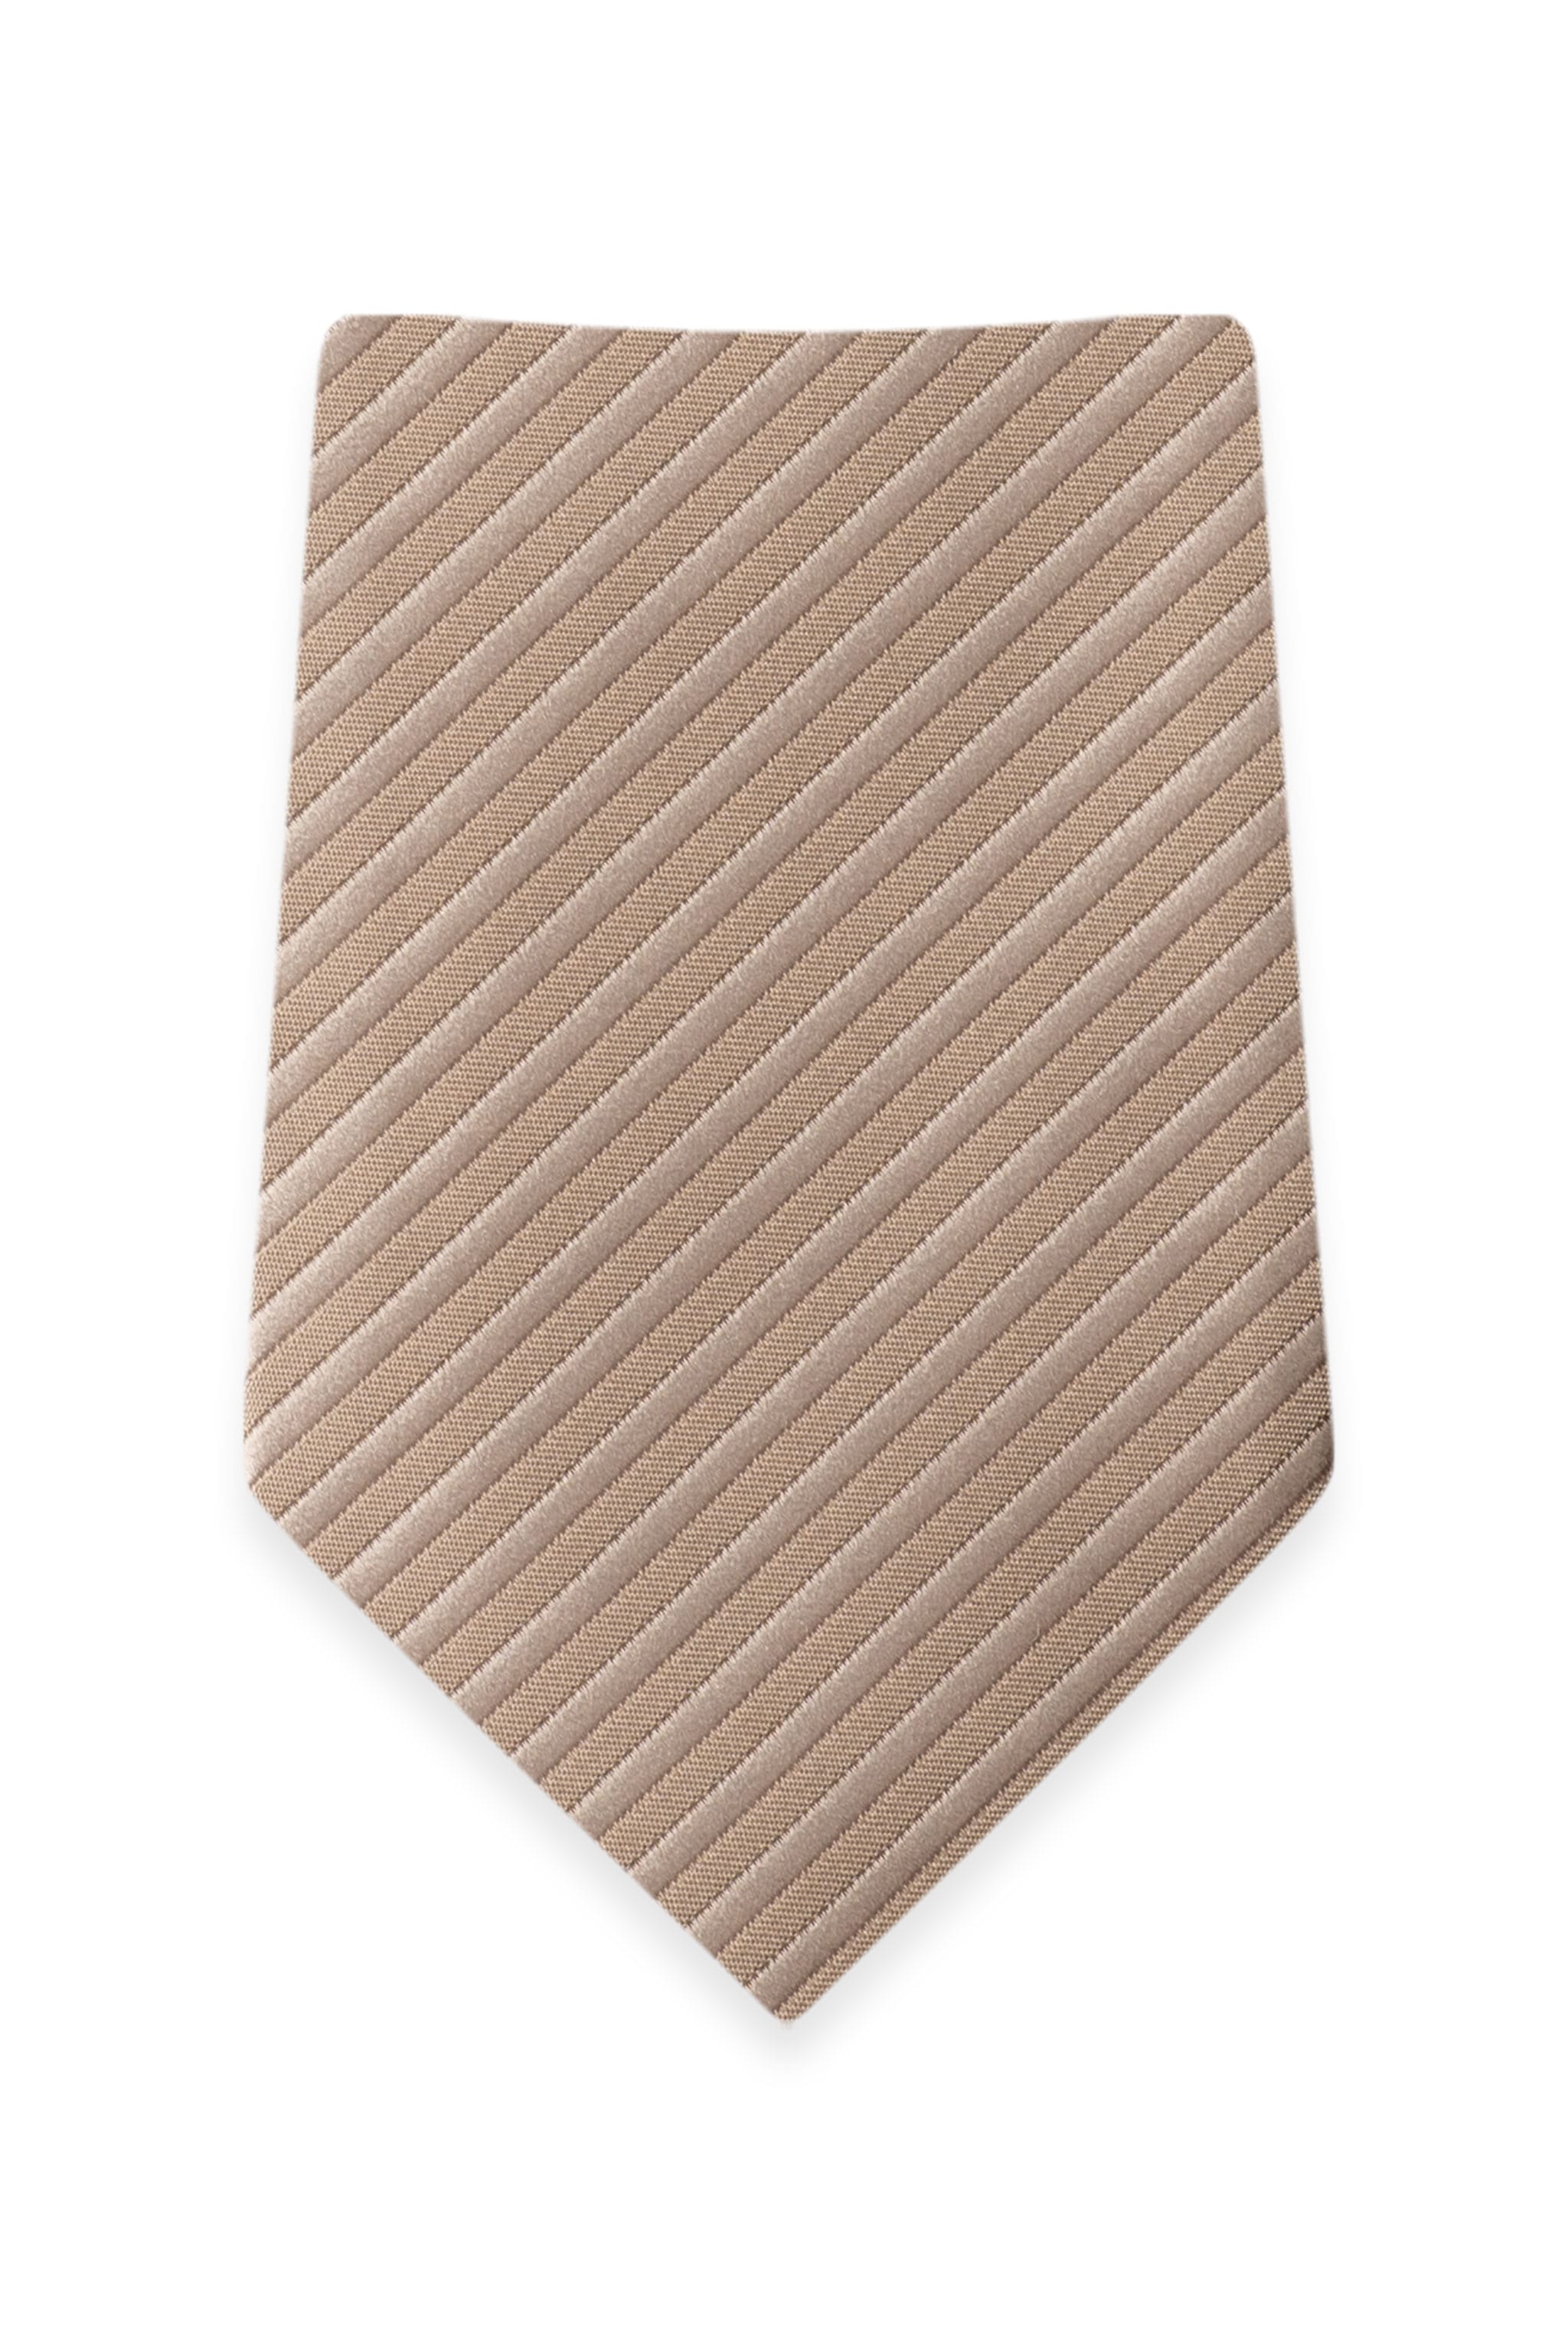 Striped Taupe Self-Tie Windsor Tie